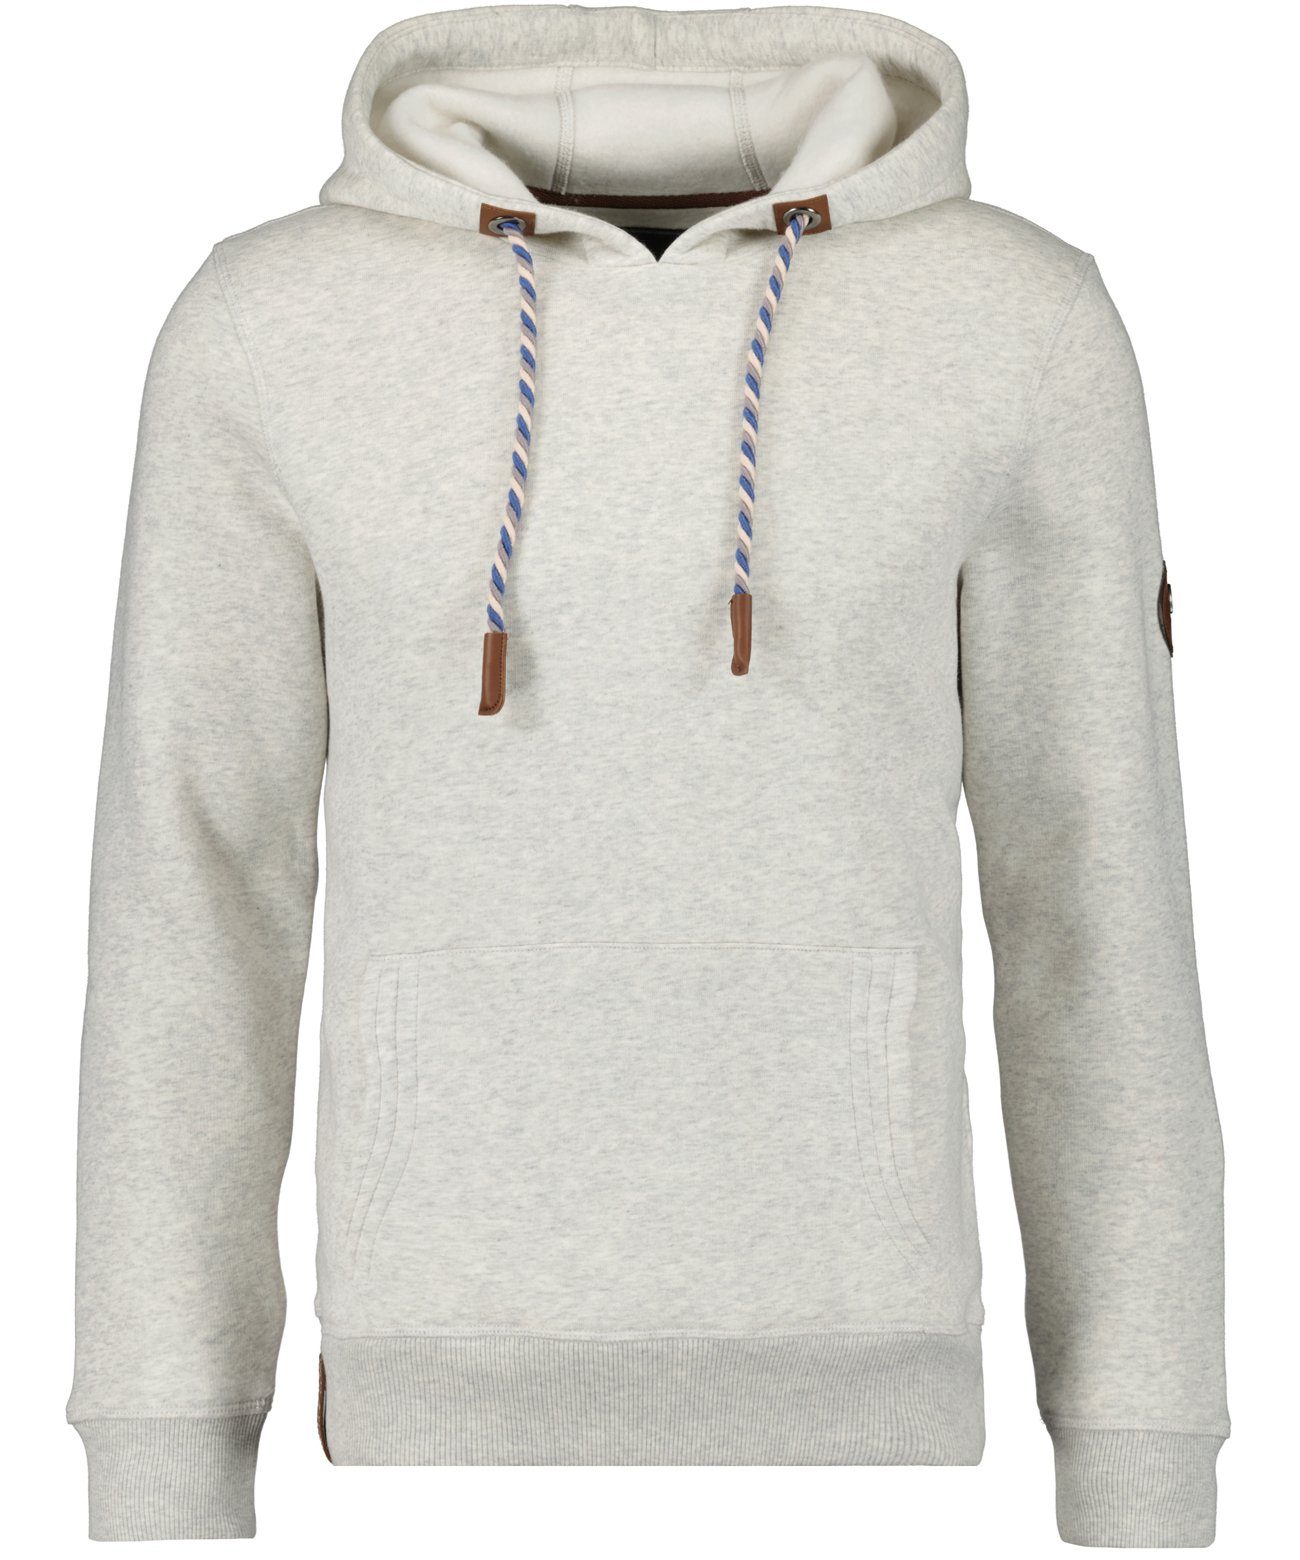 RAGMAN Sweatshirt Grau-011 | Sweatshirts